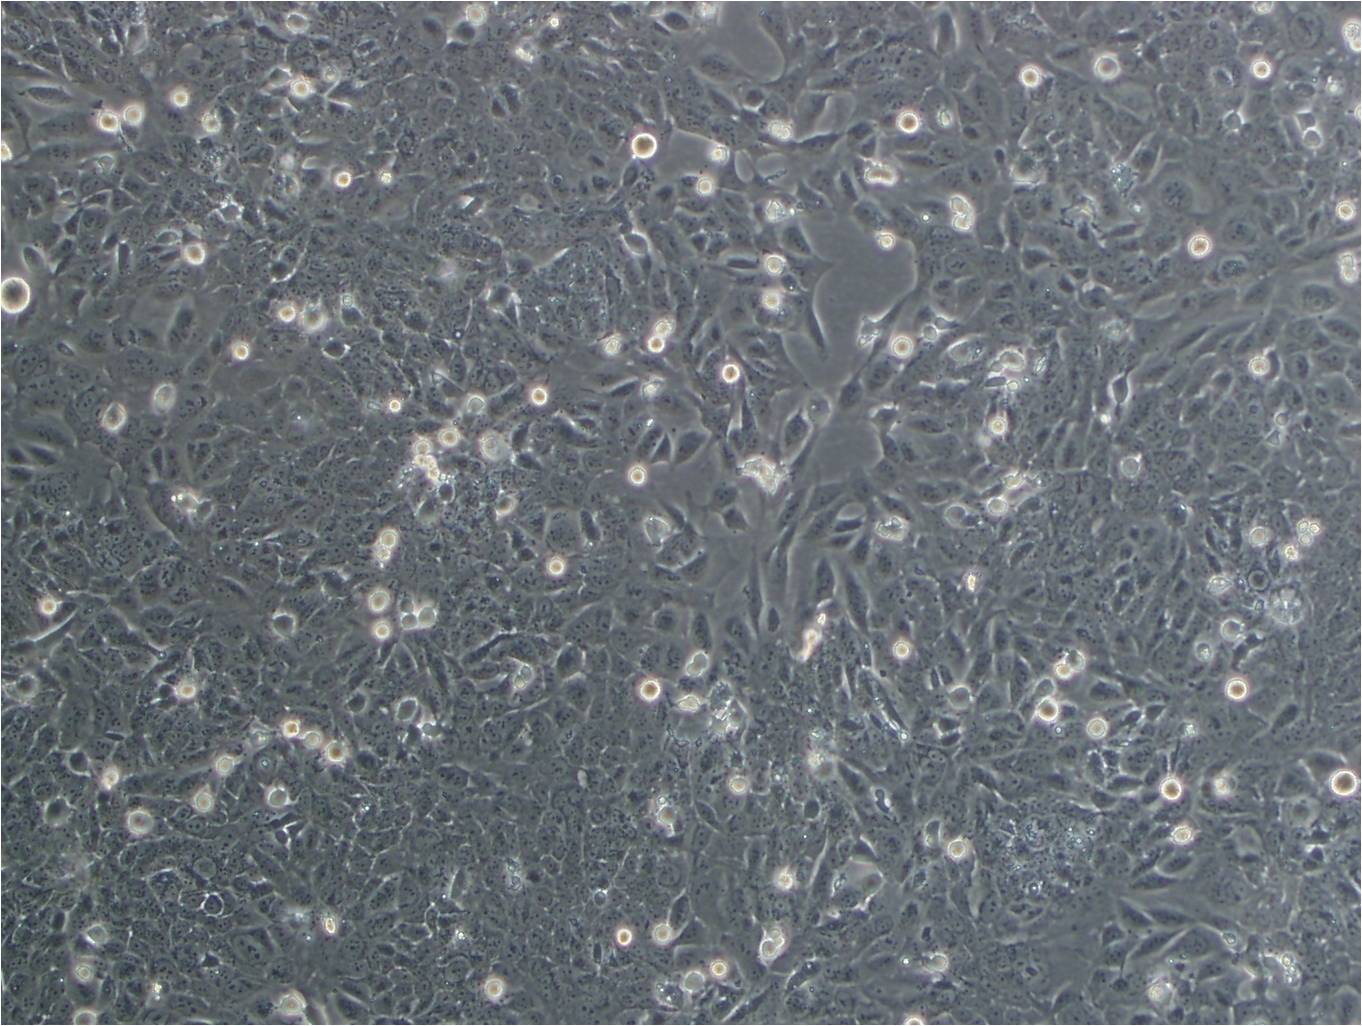 G-Olig2 cell line小鼠胚胎干细胞系,G-Olig2 cell line